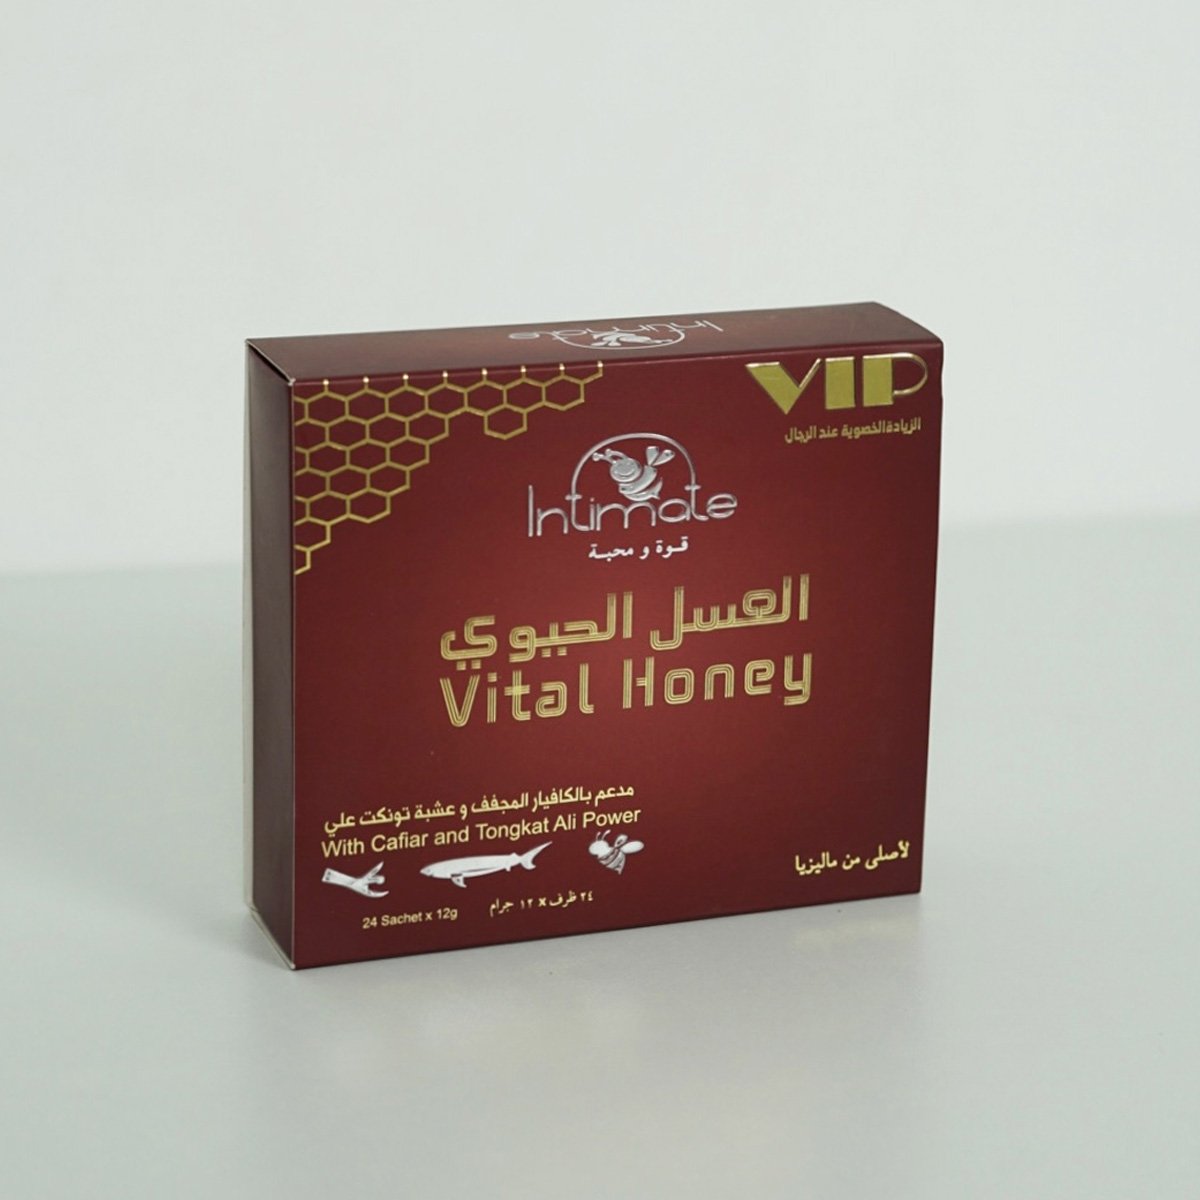 INTIMATE VIP Vital Honey Malaysia